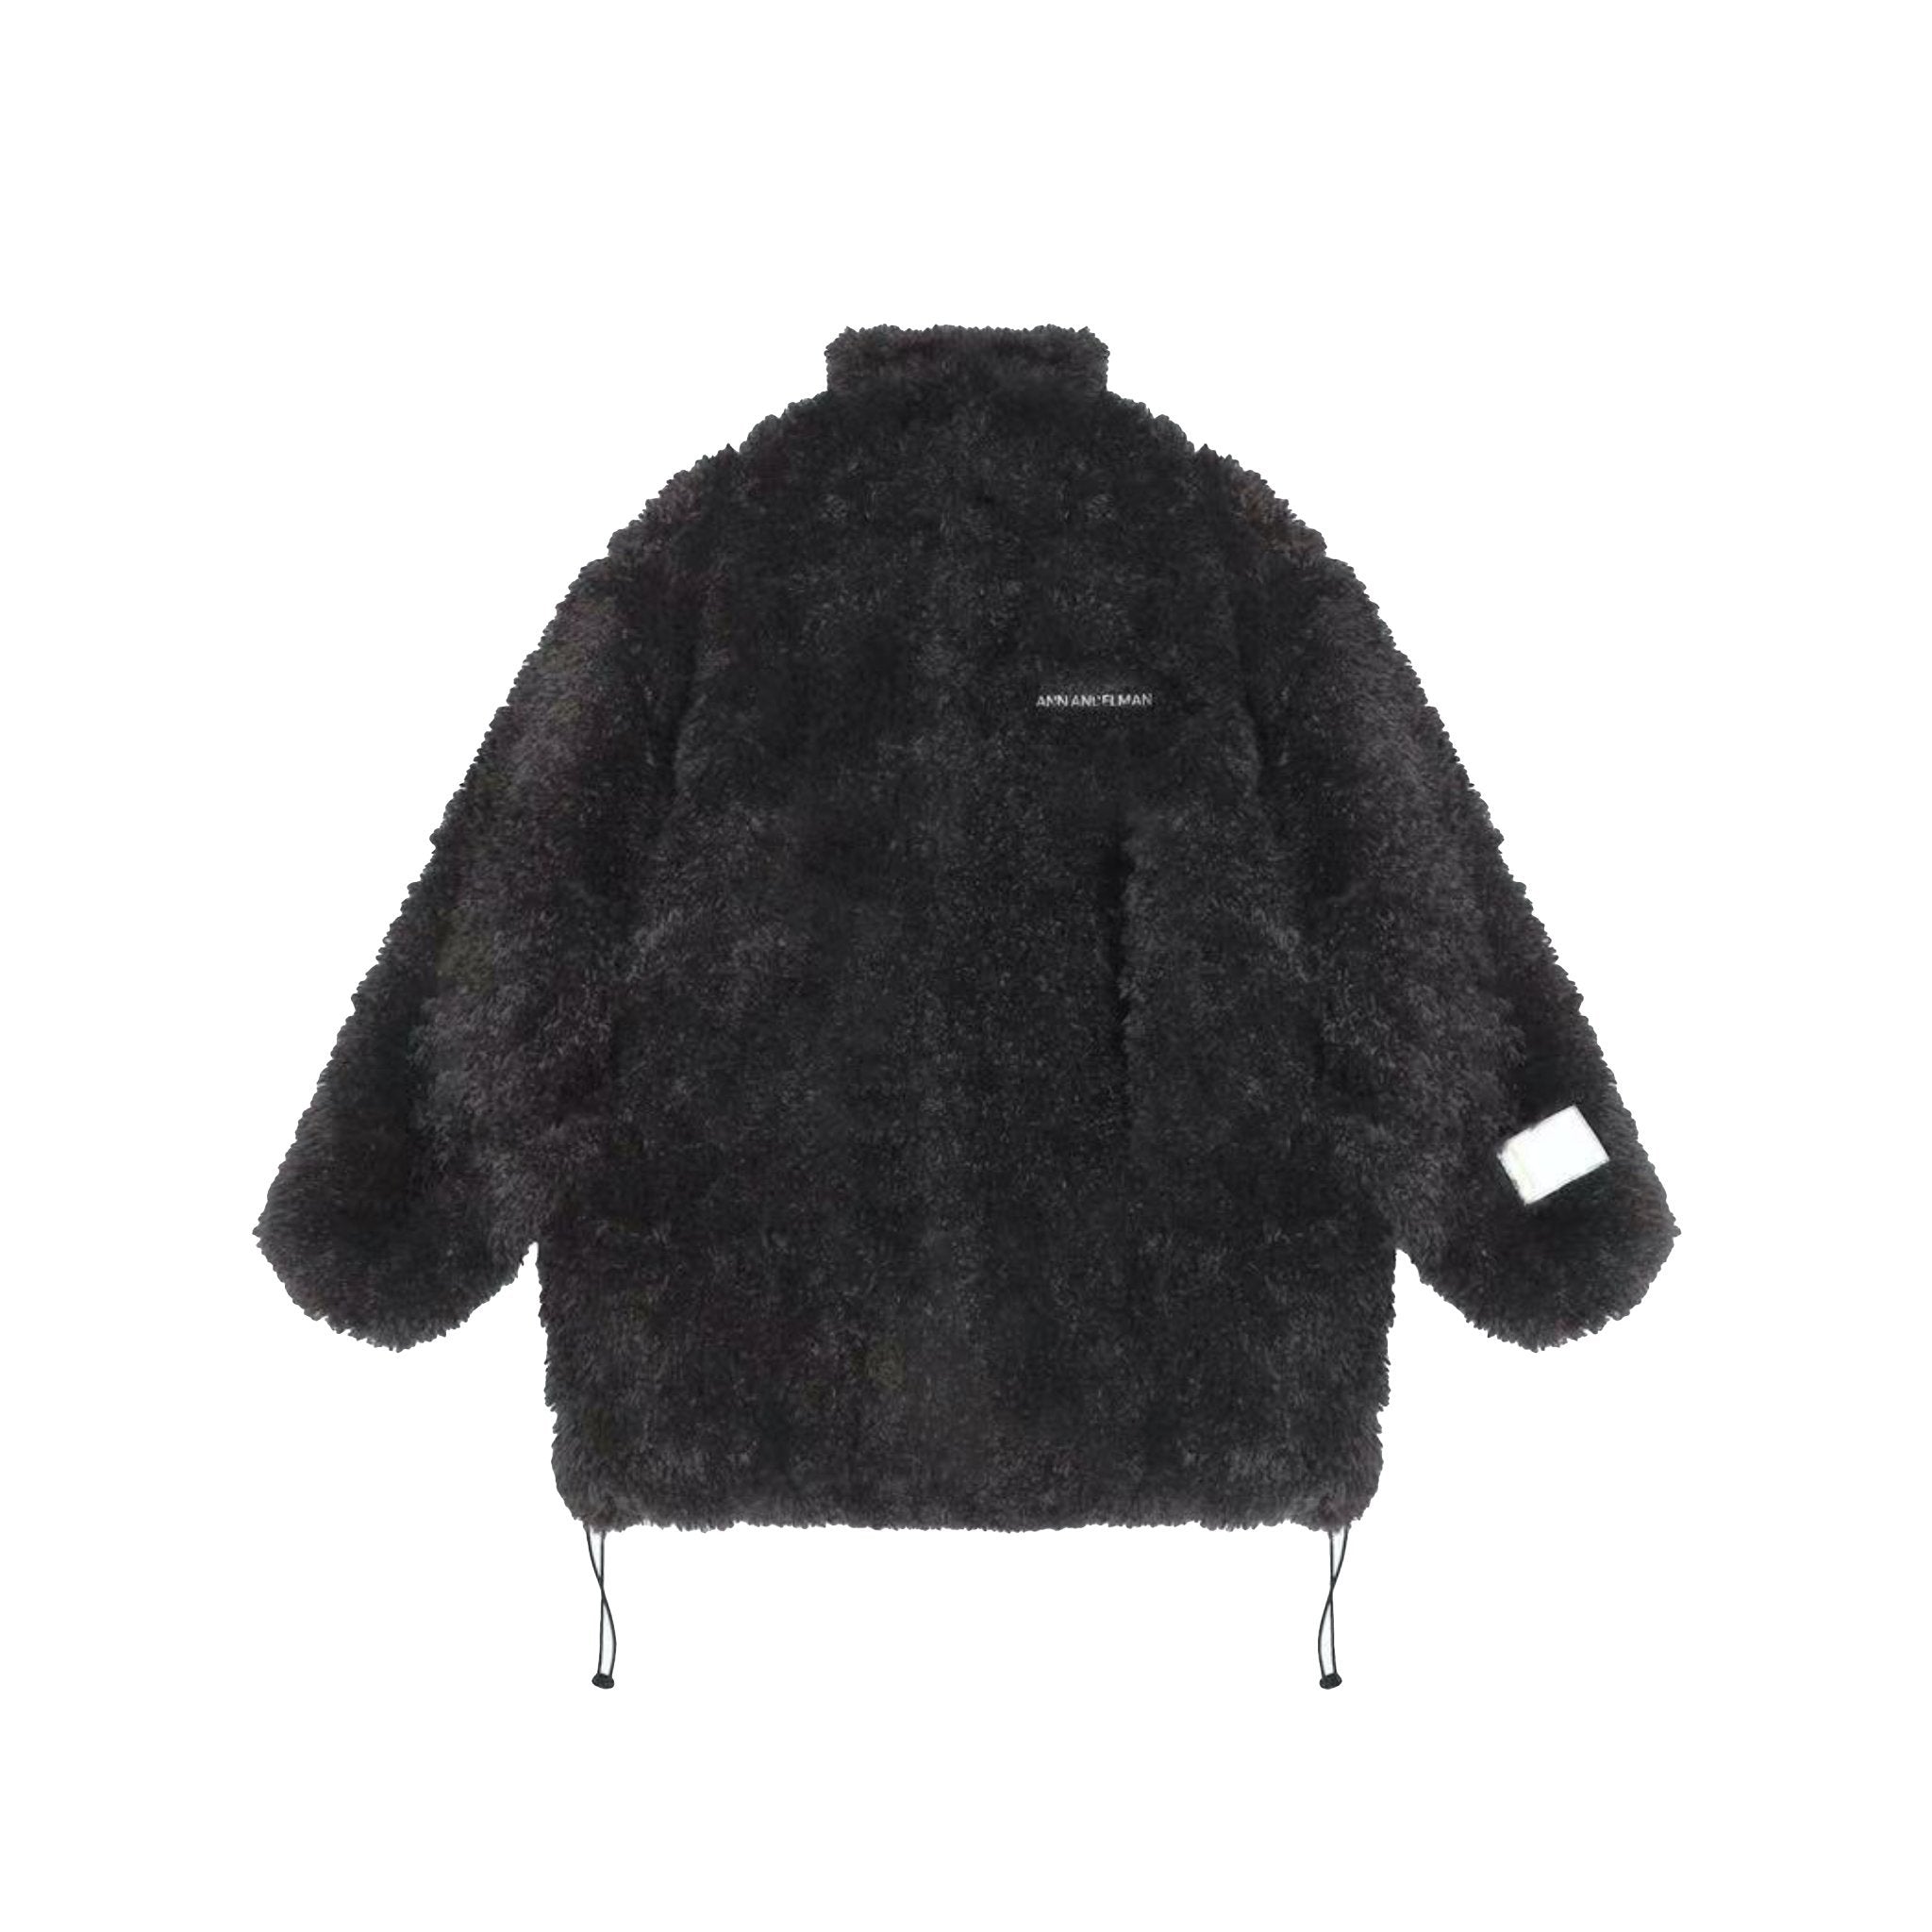 ANN ANDELMAN Gray Oversized Fur Coat | MADA IN CHINA